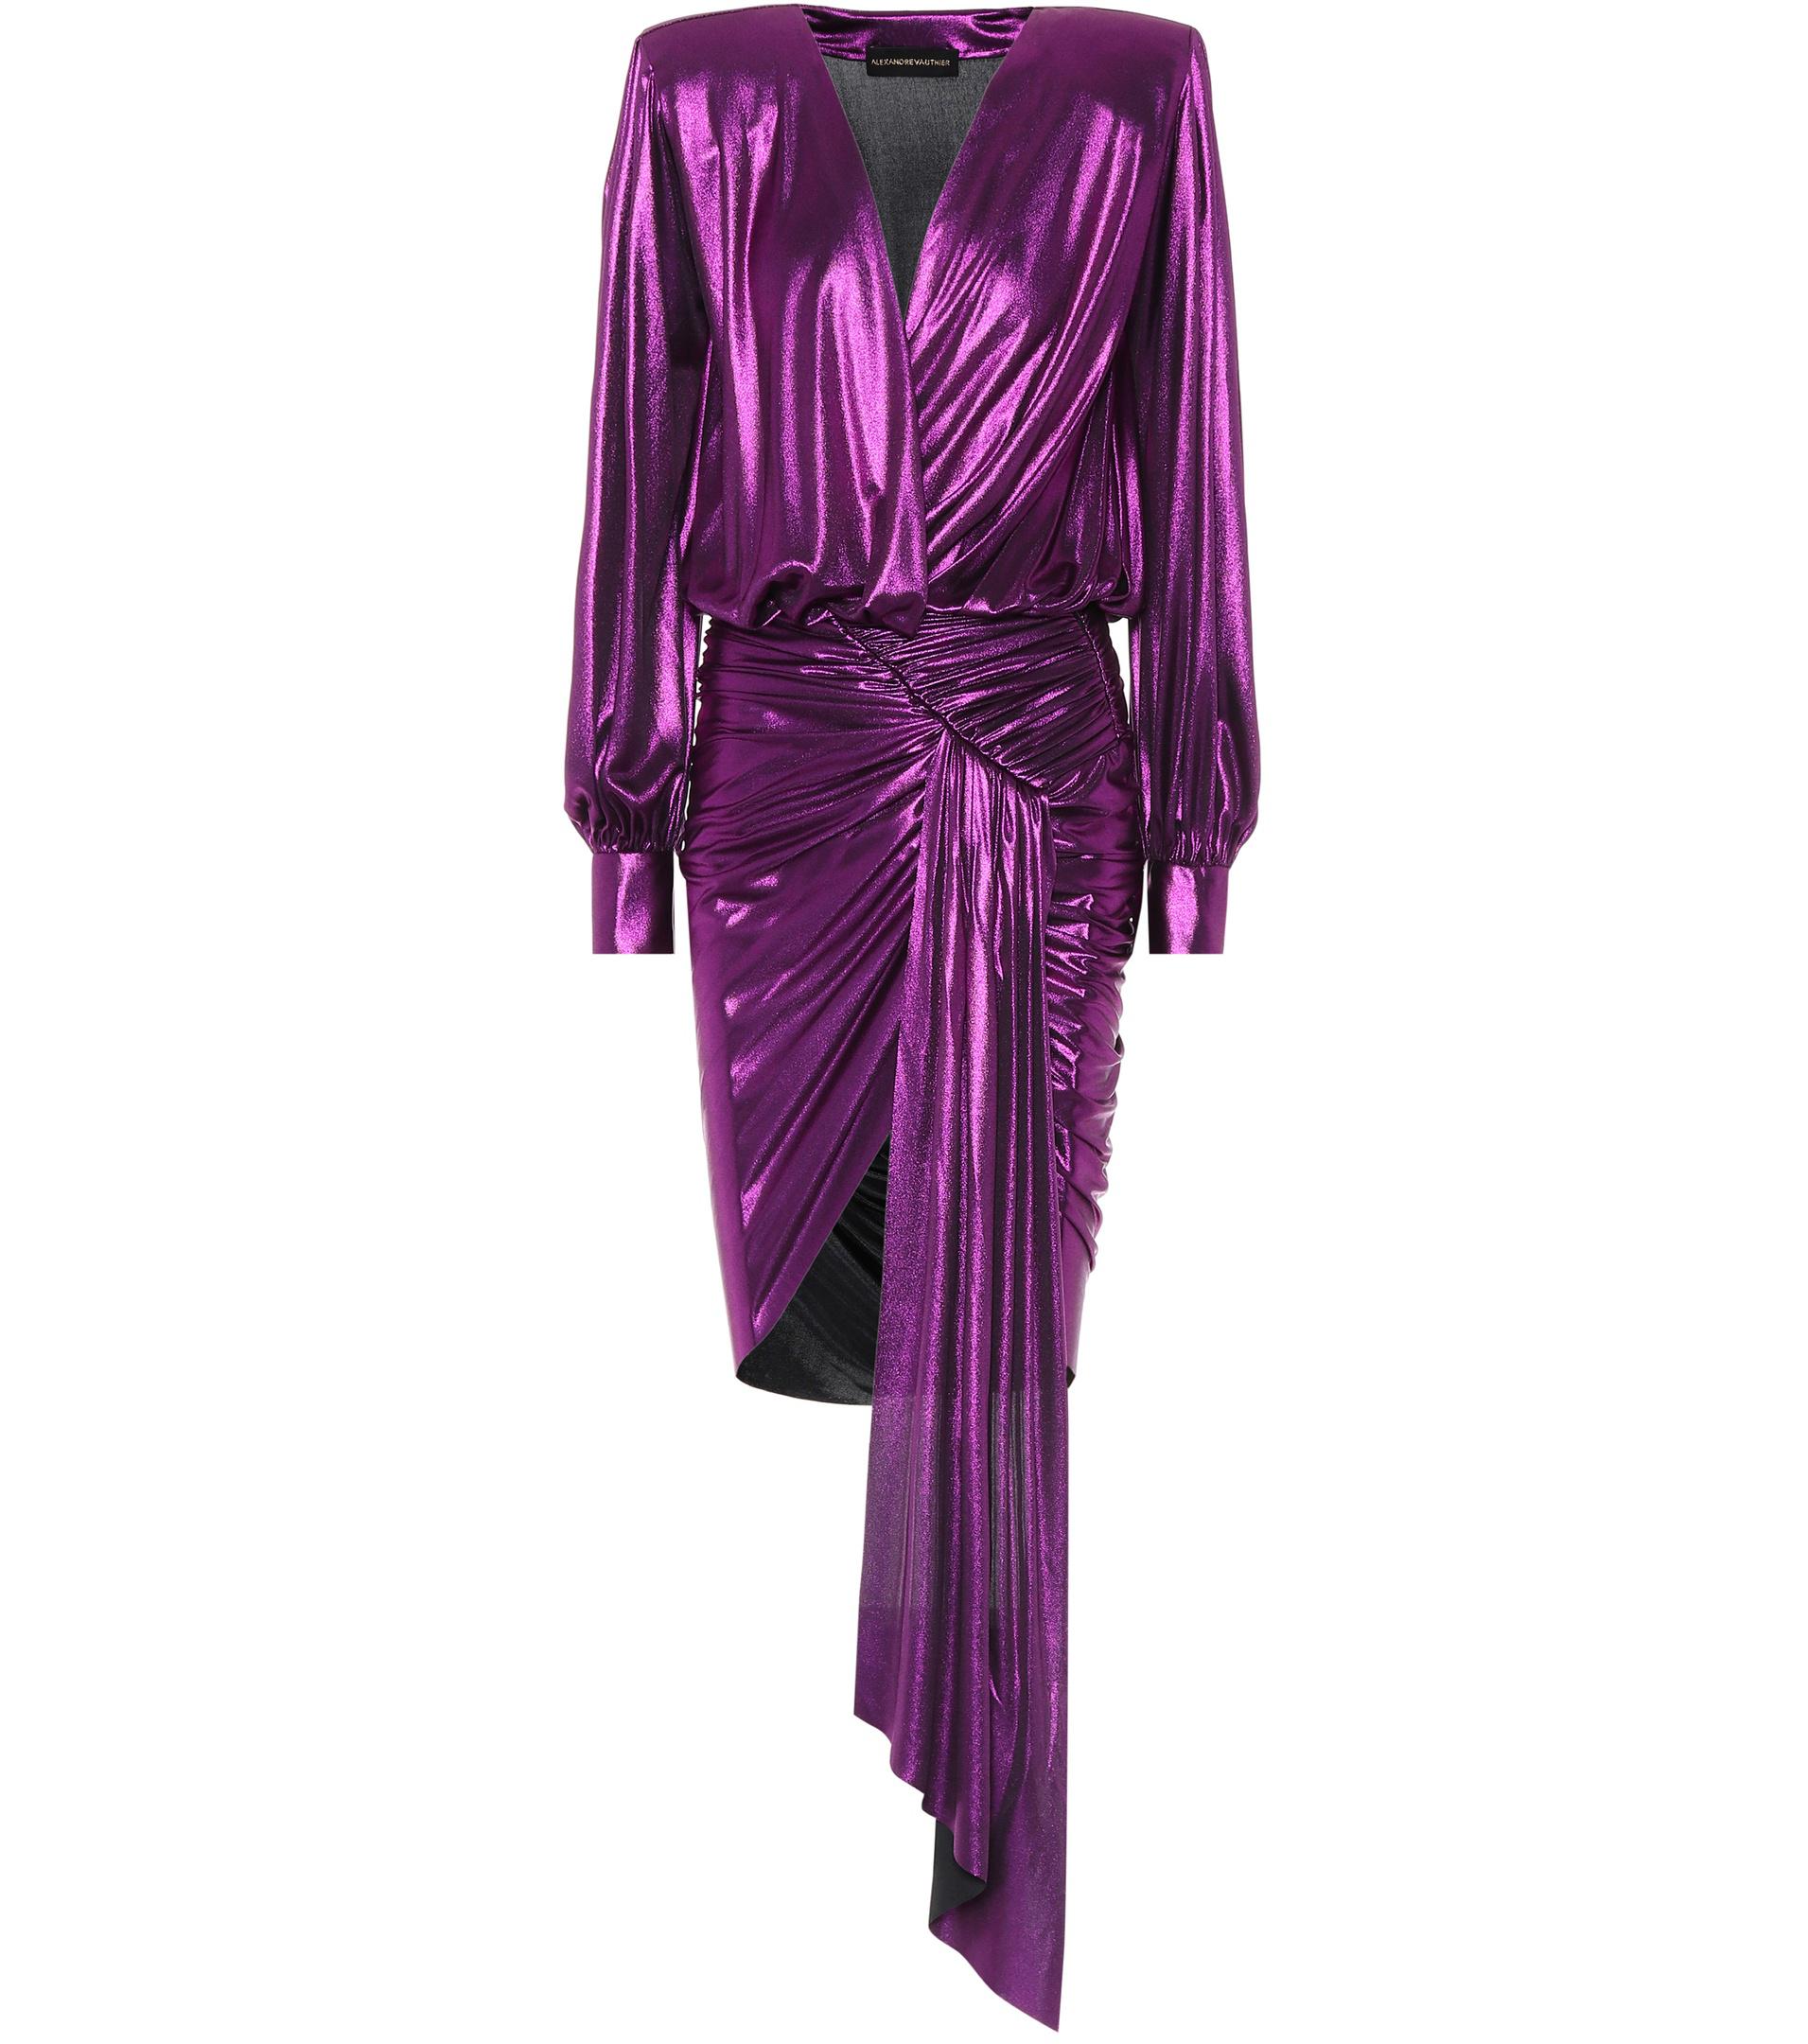 purple lame dress